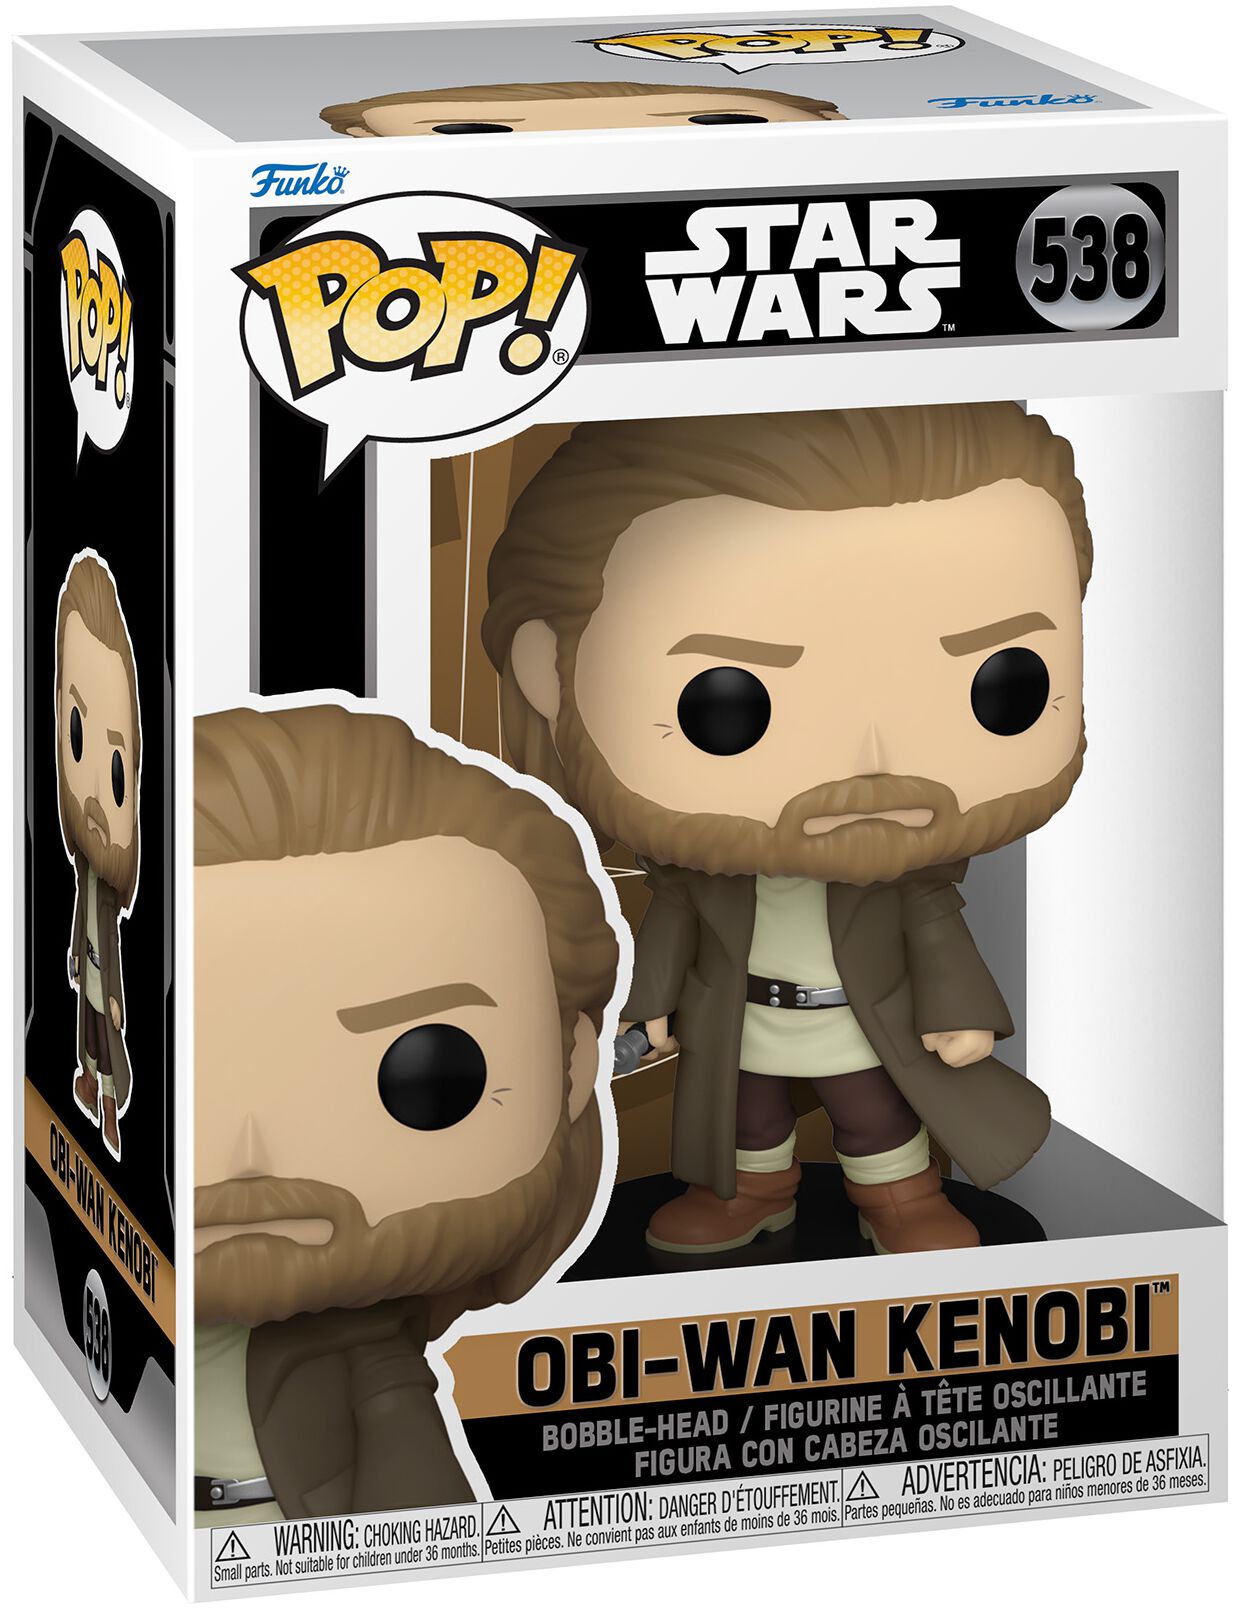 Star Wars - Obi-Wan Kenobi Vinyl Figur 538 - Funko Pop! Figur - multicolor